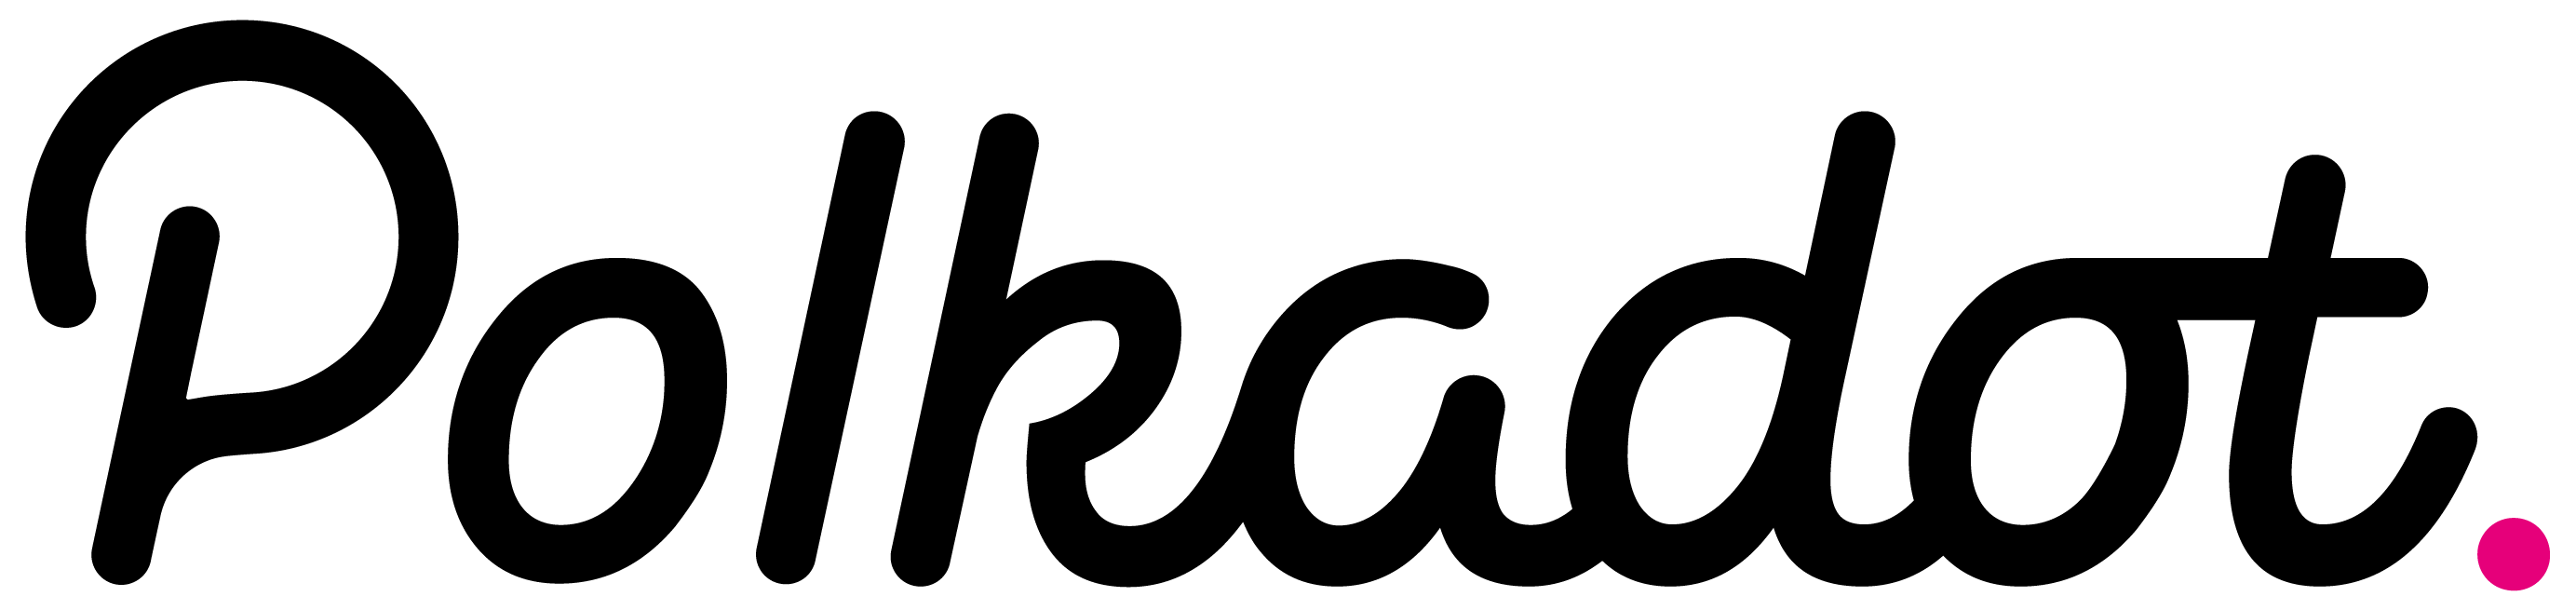 Polkadot logo colors